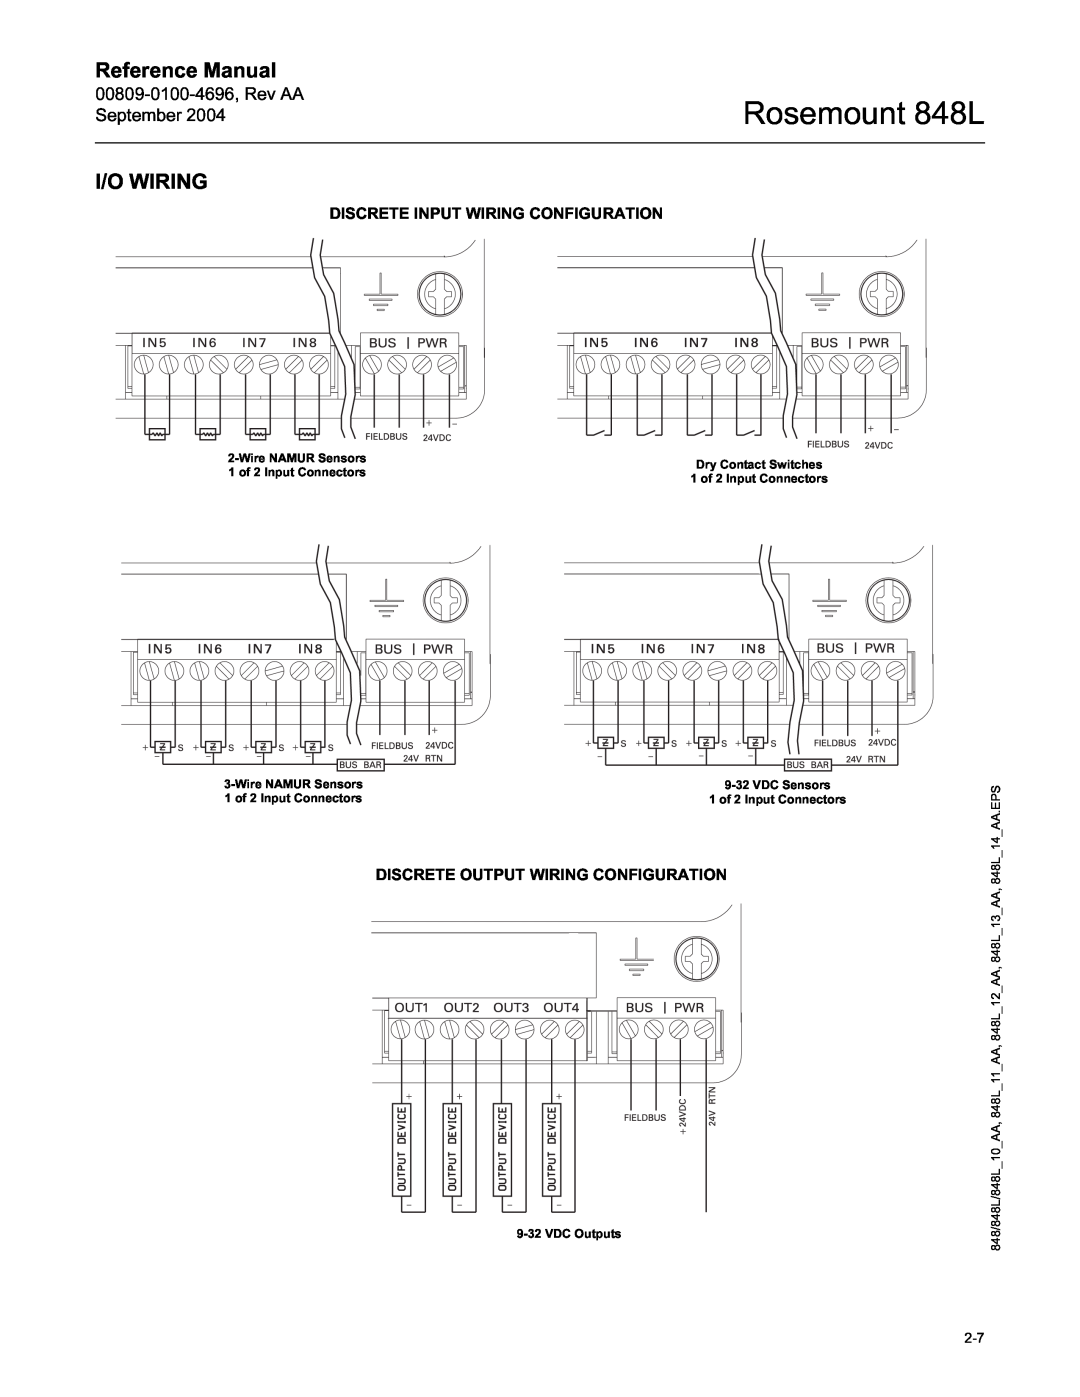 Emerson manual I/O Wiring, Rosemount 848L, Reference Manual, Discrete Input Wiring Configuration 